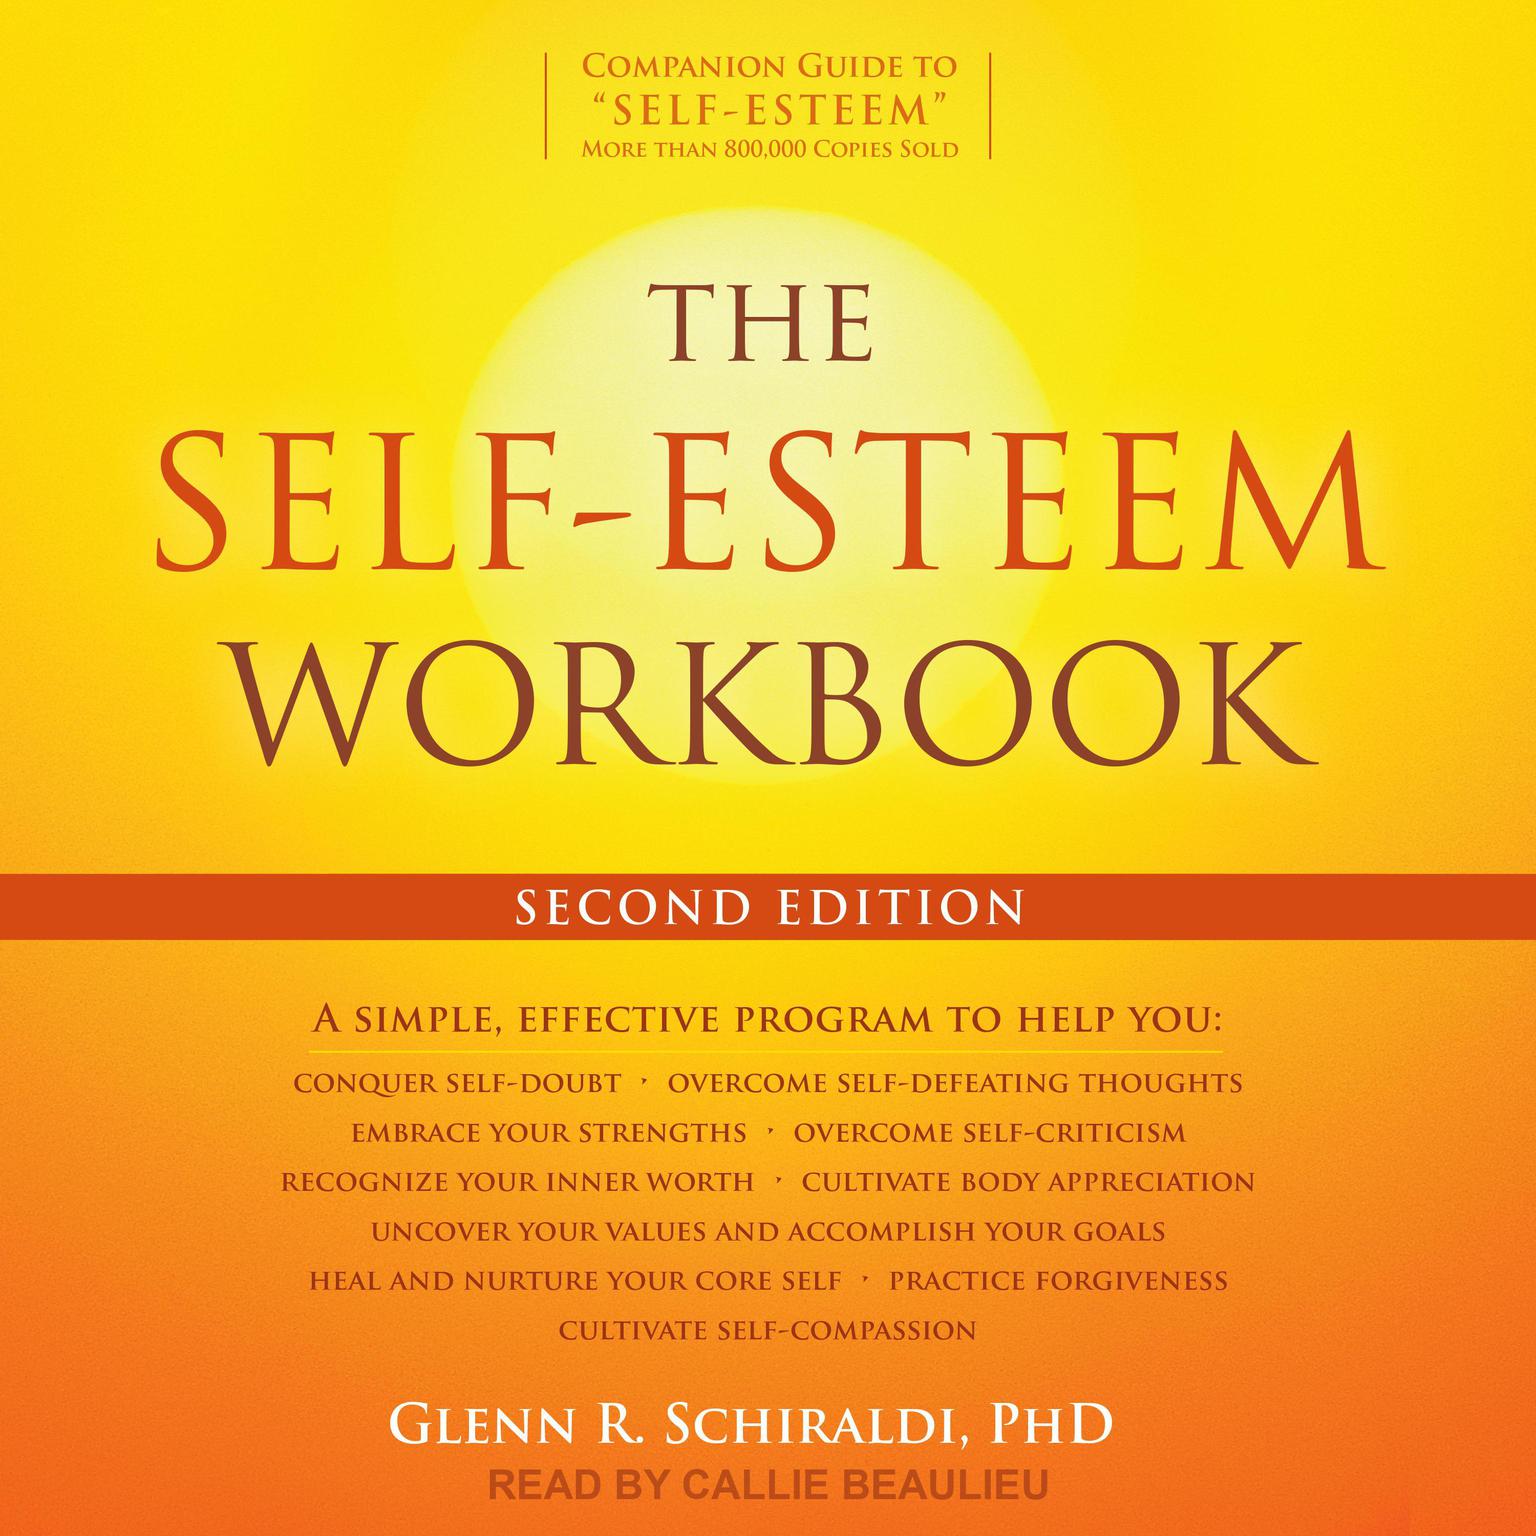 The Self-Esteem Workbook: Second Edition Audiobook, by Glenn R. Schiraldi